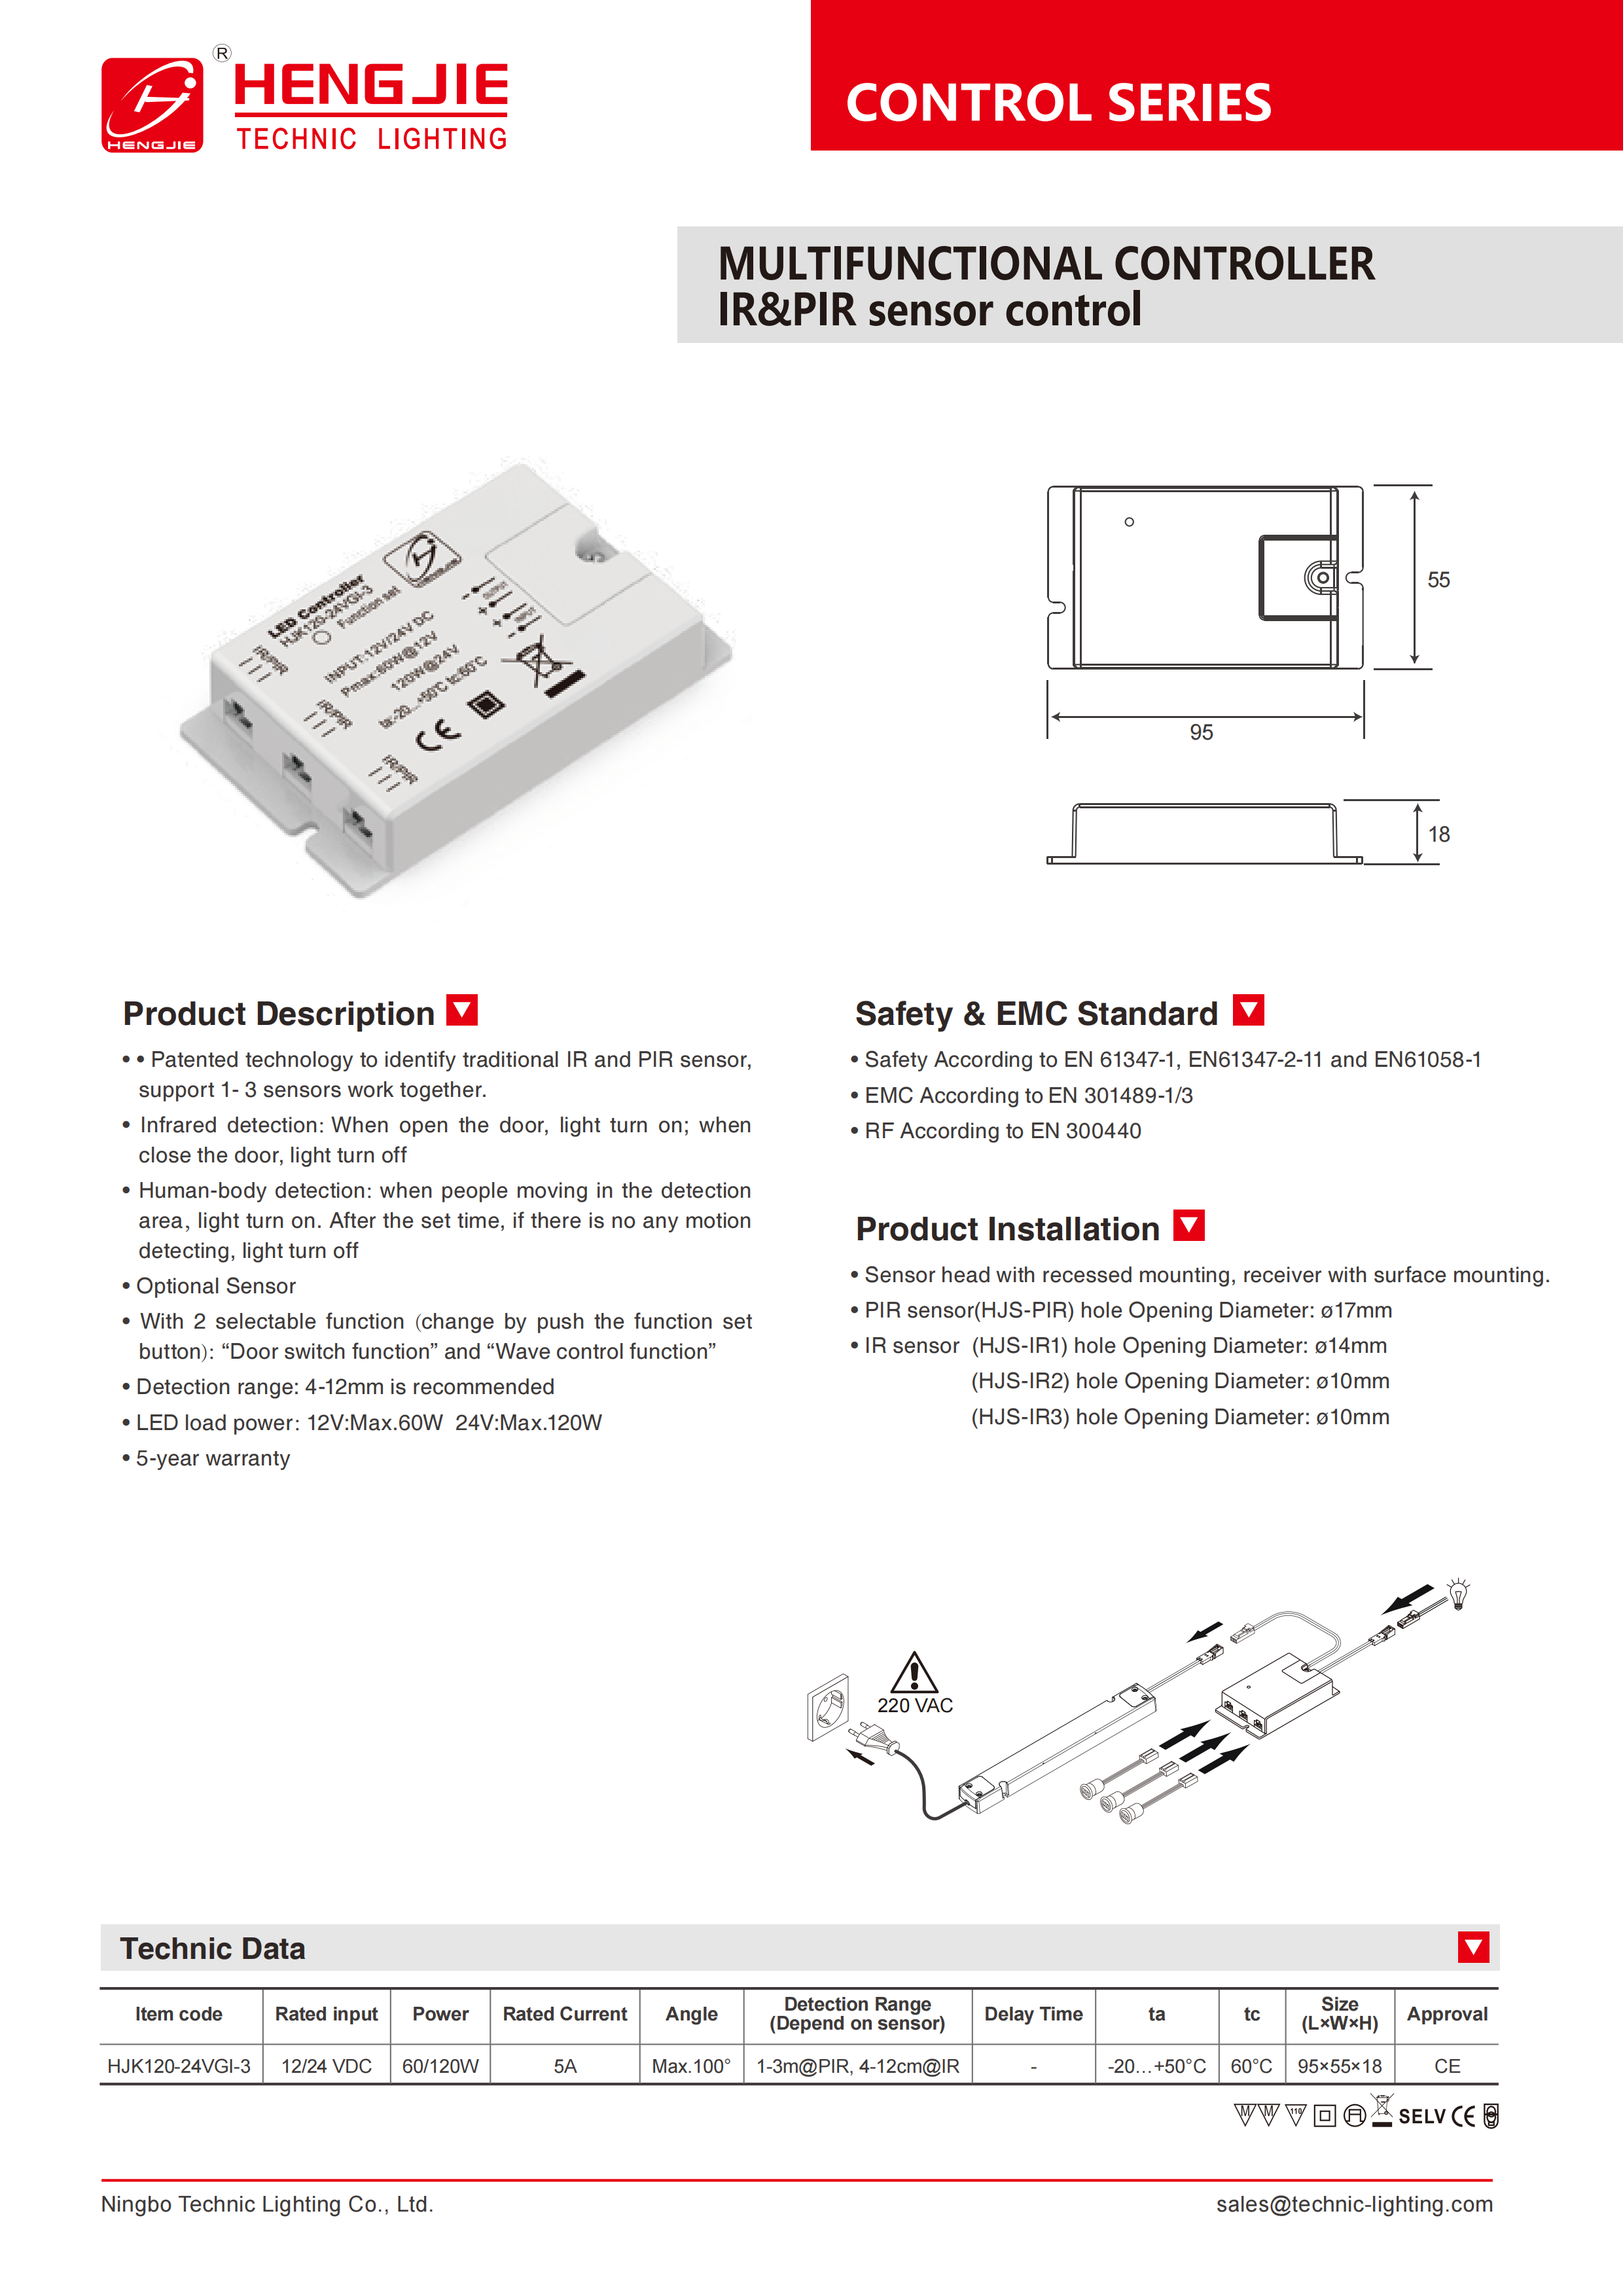 Hengjie 12 MULTIFUNCTIONAL CONTROLLER - IR&PIR sensor controller_00.png